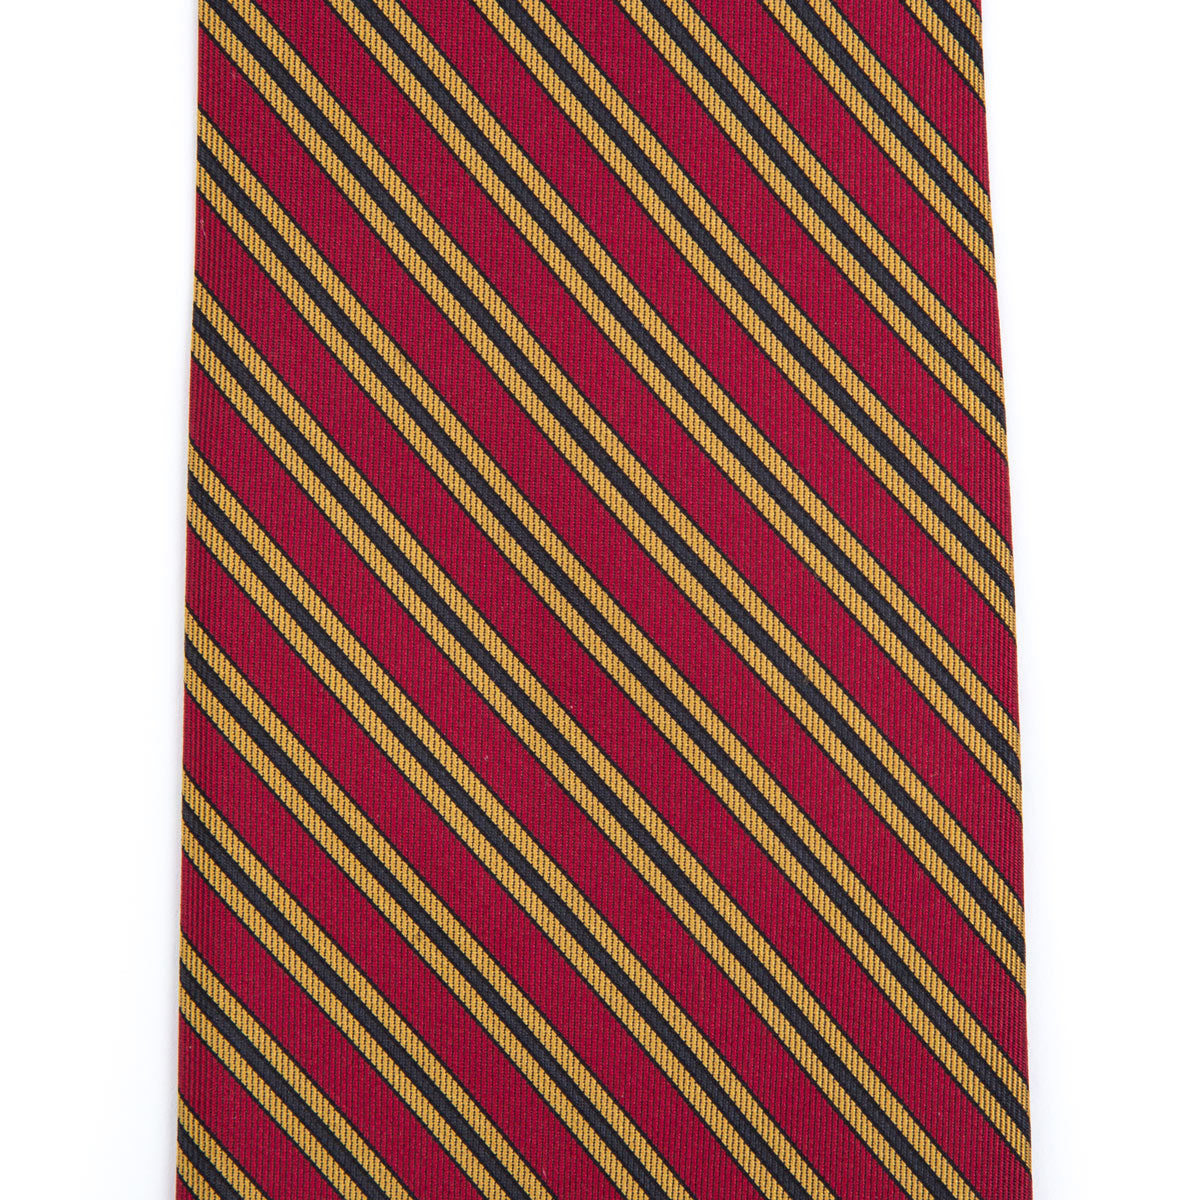 Cherry striped tie